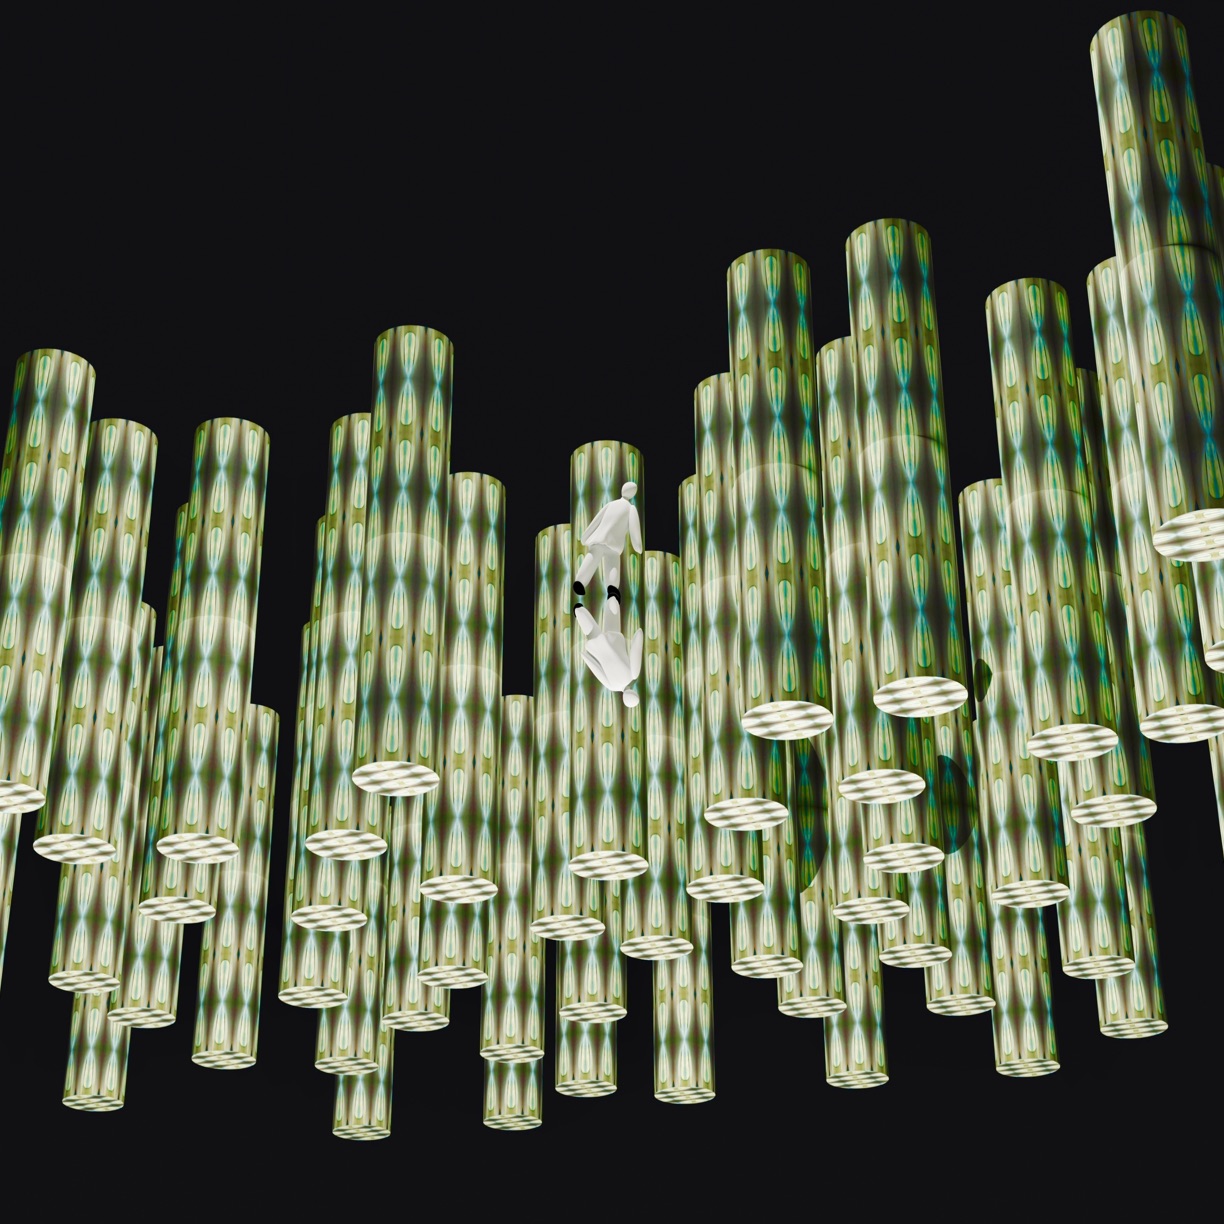 Atsushigraphの作品「Crystal Pillar」の画像です。